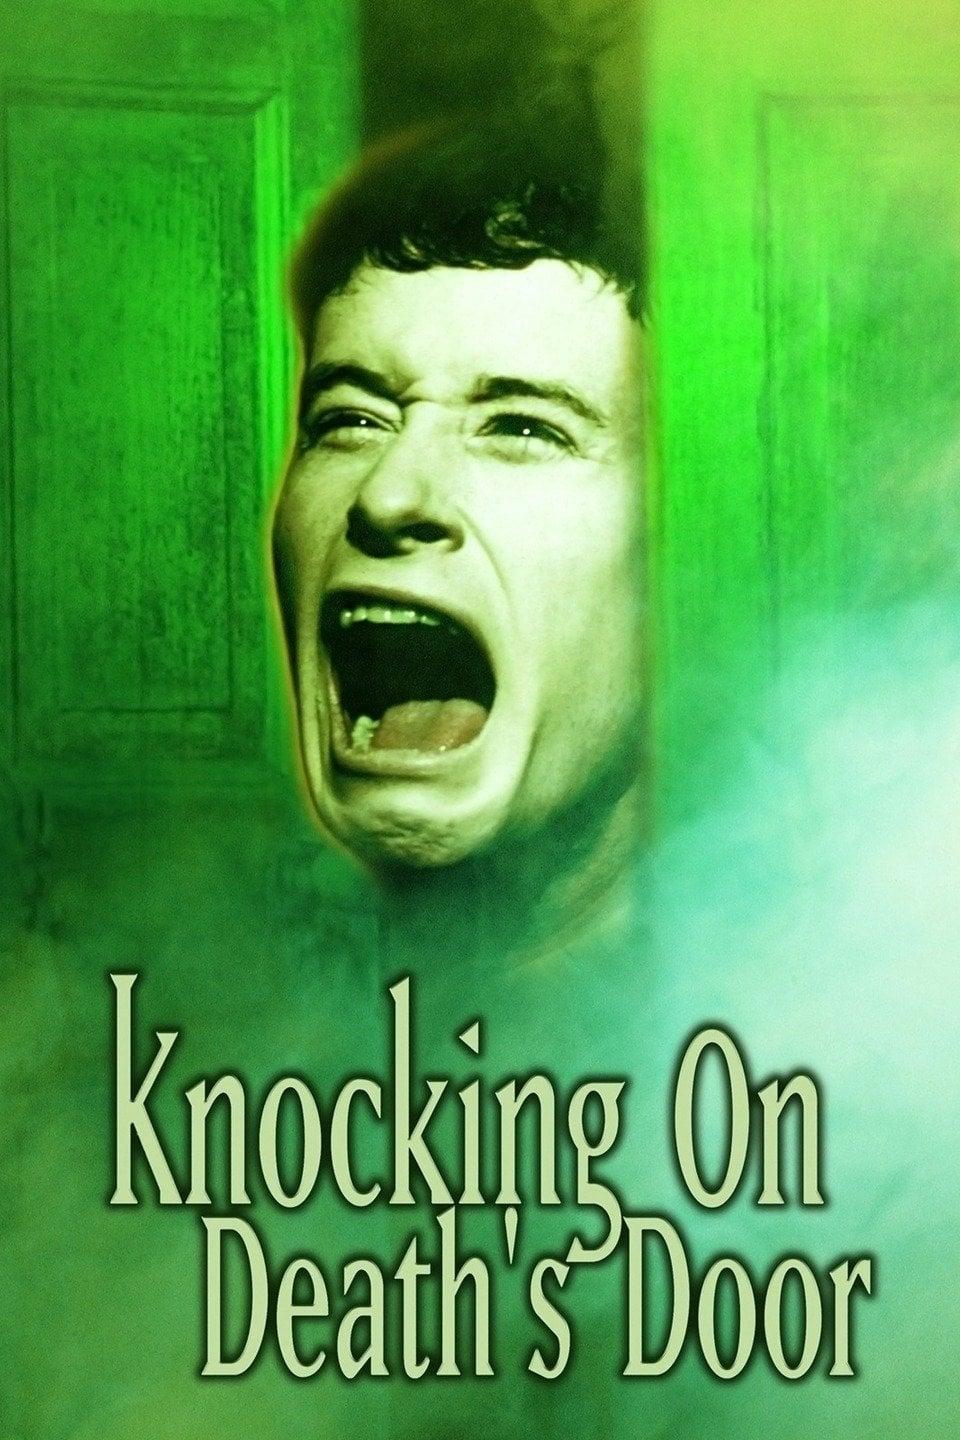 Knocking on Death's Door poster